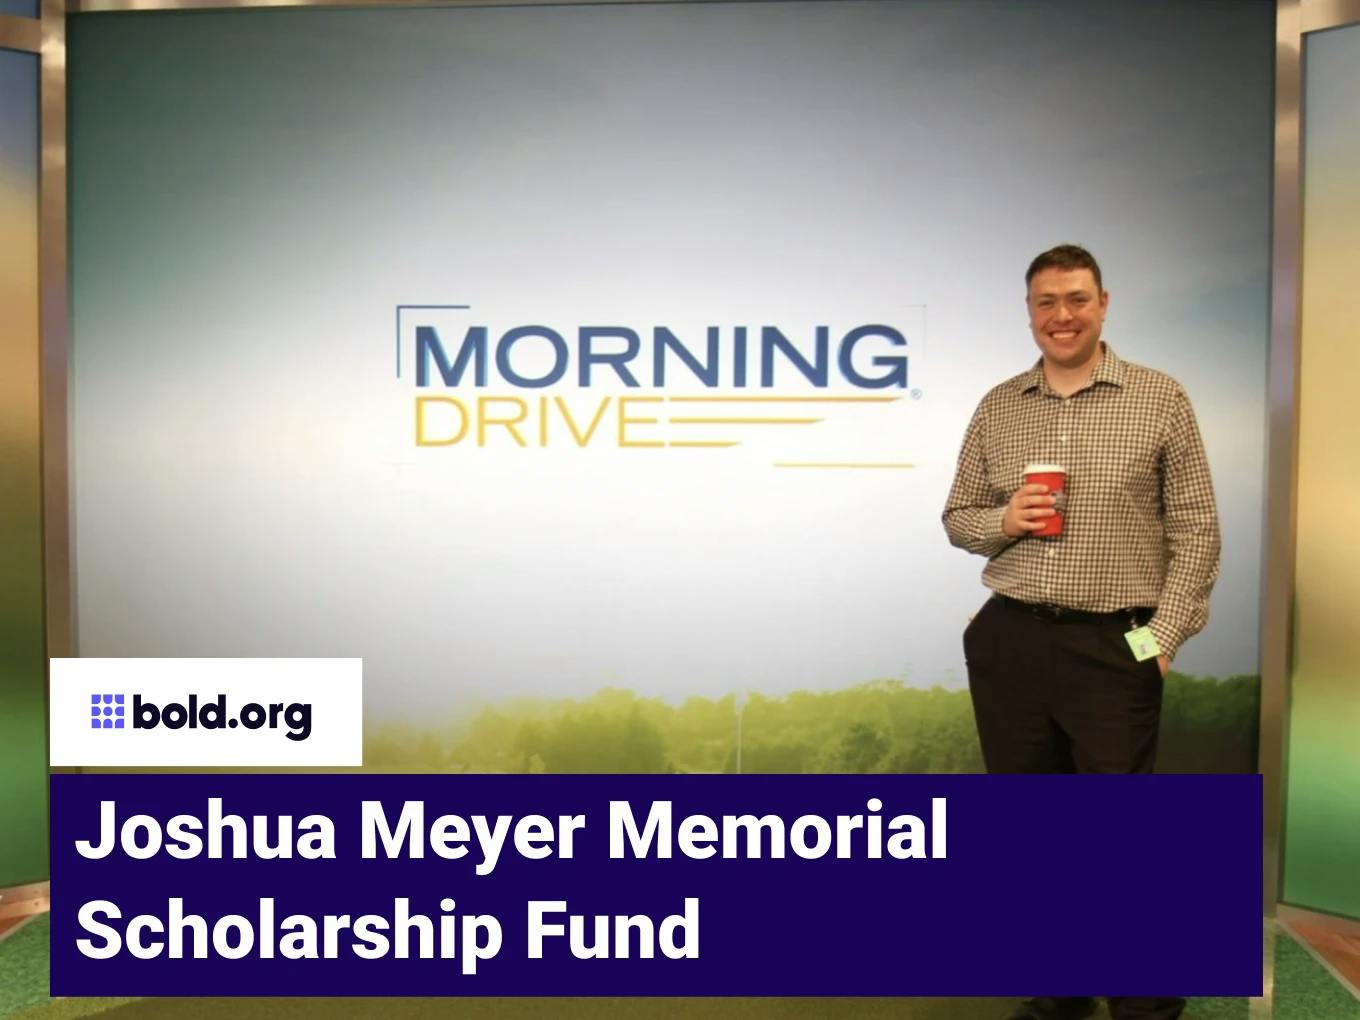 Joshua Meyer Memorial Scholarship Fund